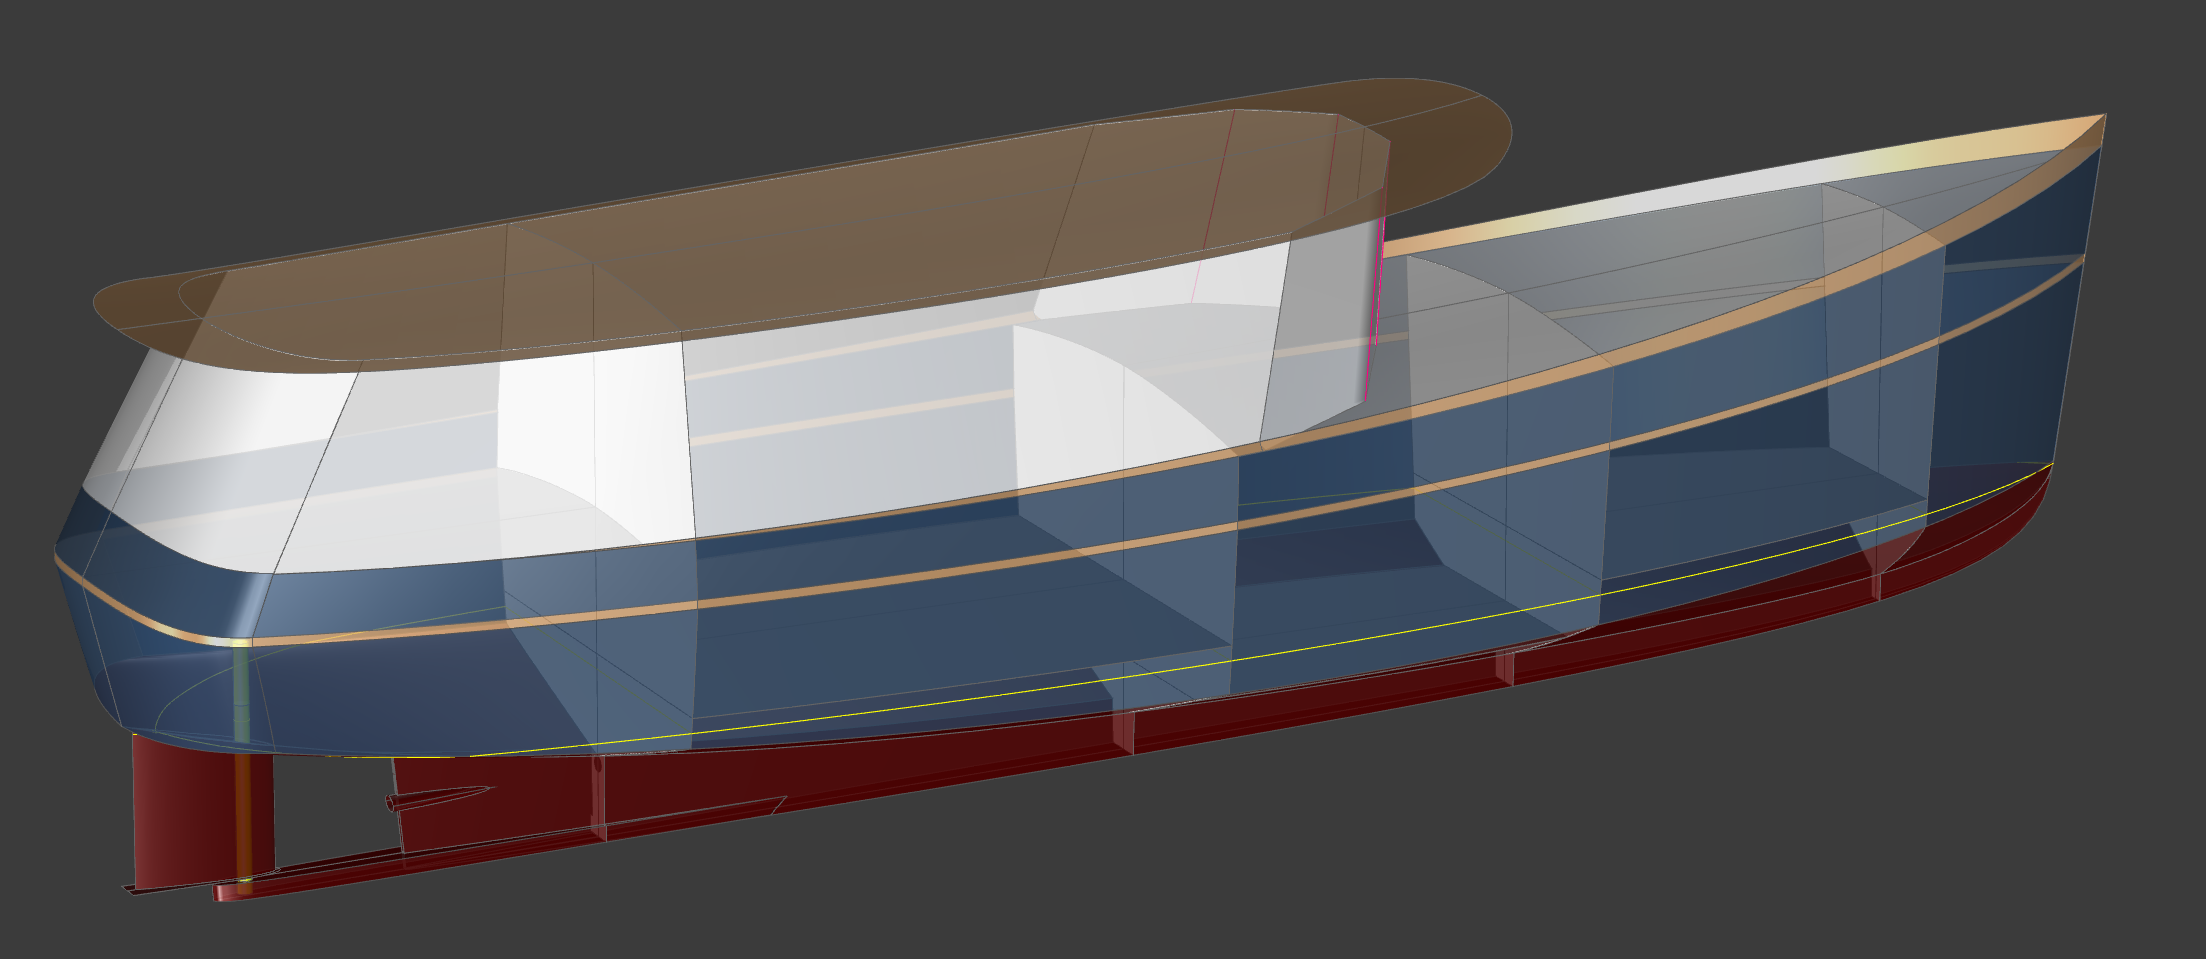 35' "Big Ferdinand" Trawler Yacht - Kasten Marine Design, Inc.